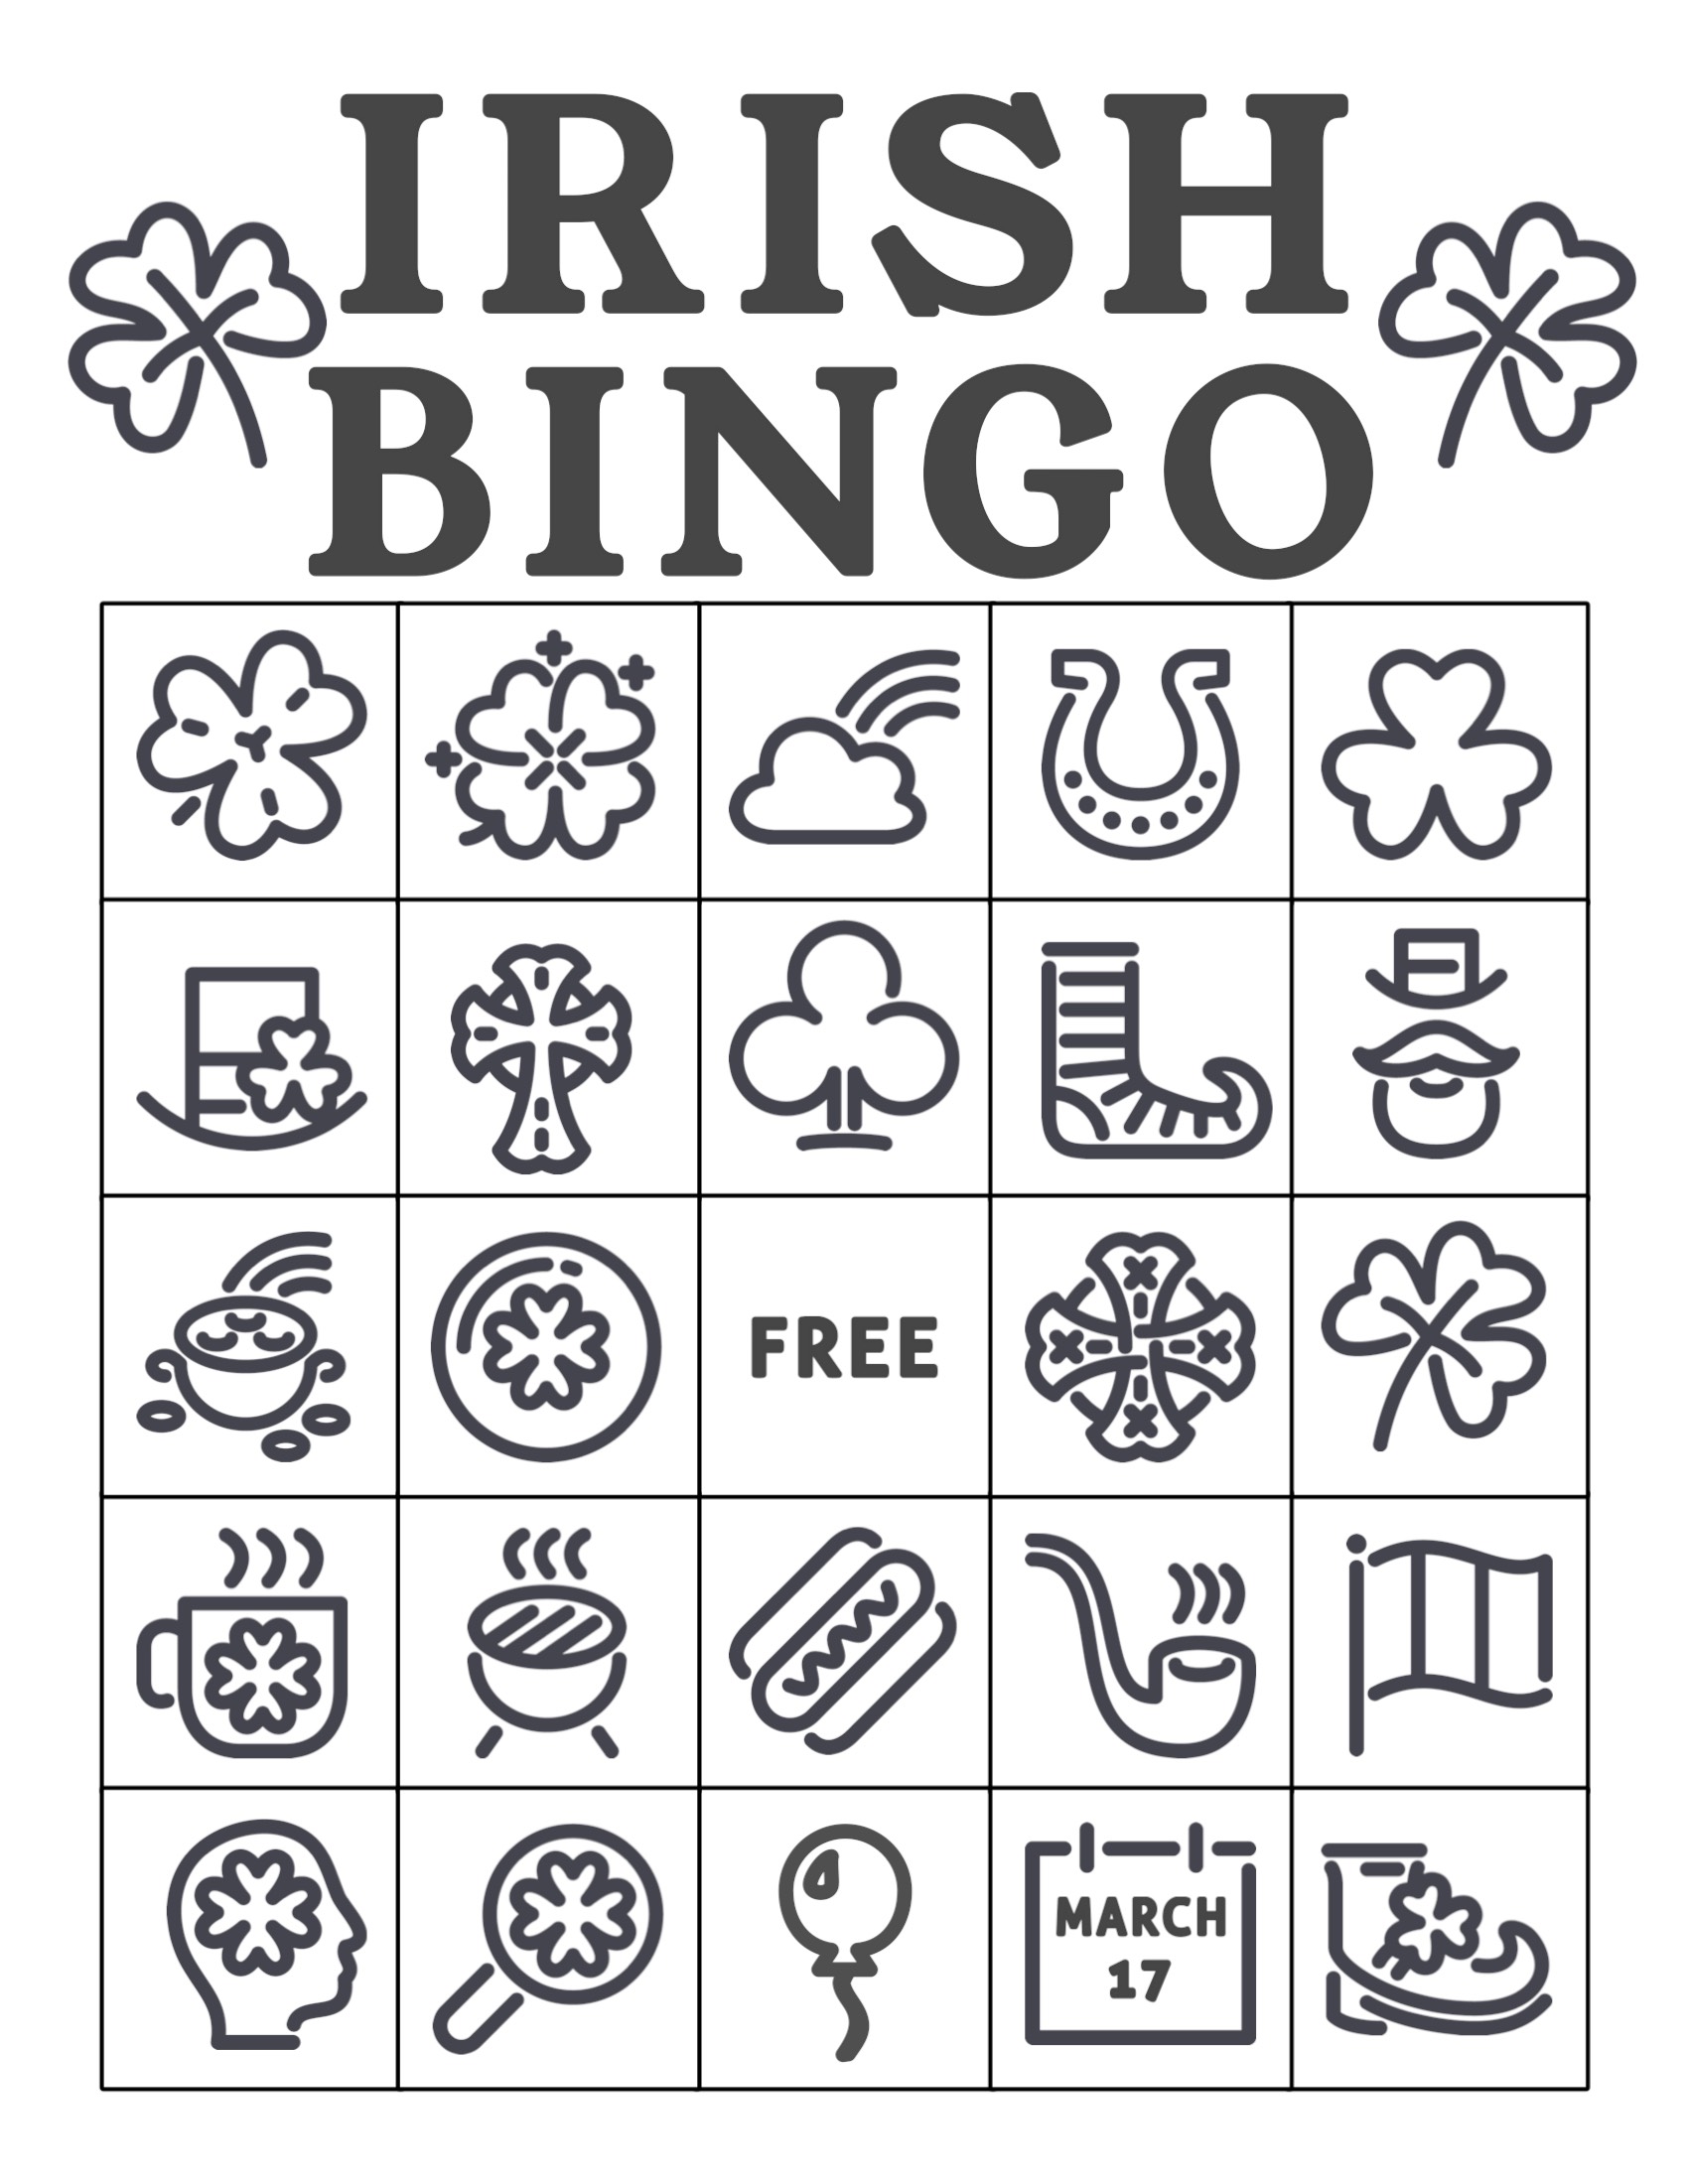 st-patrick-s-day-bingo-free-printable-with-5-bingo-boards-artofit